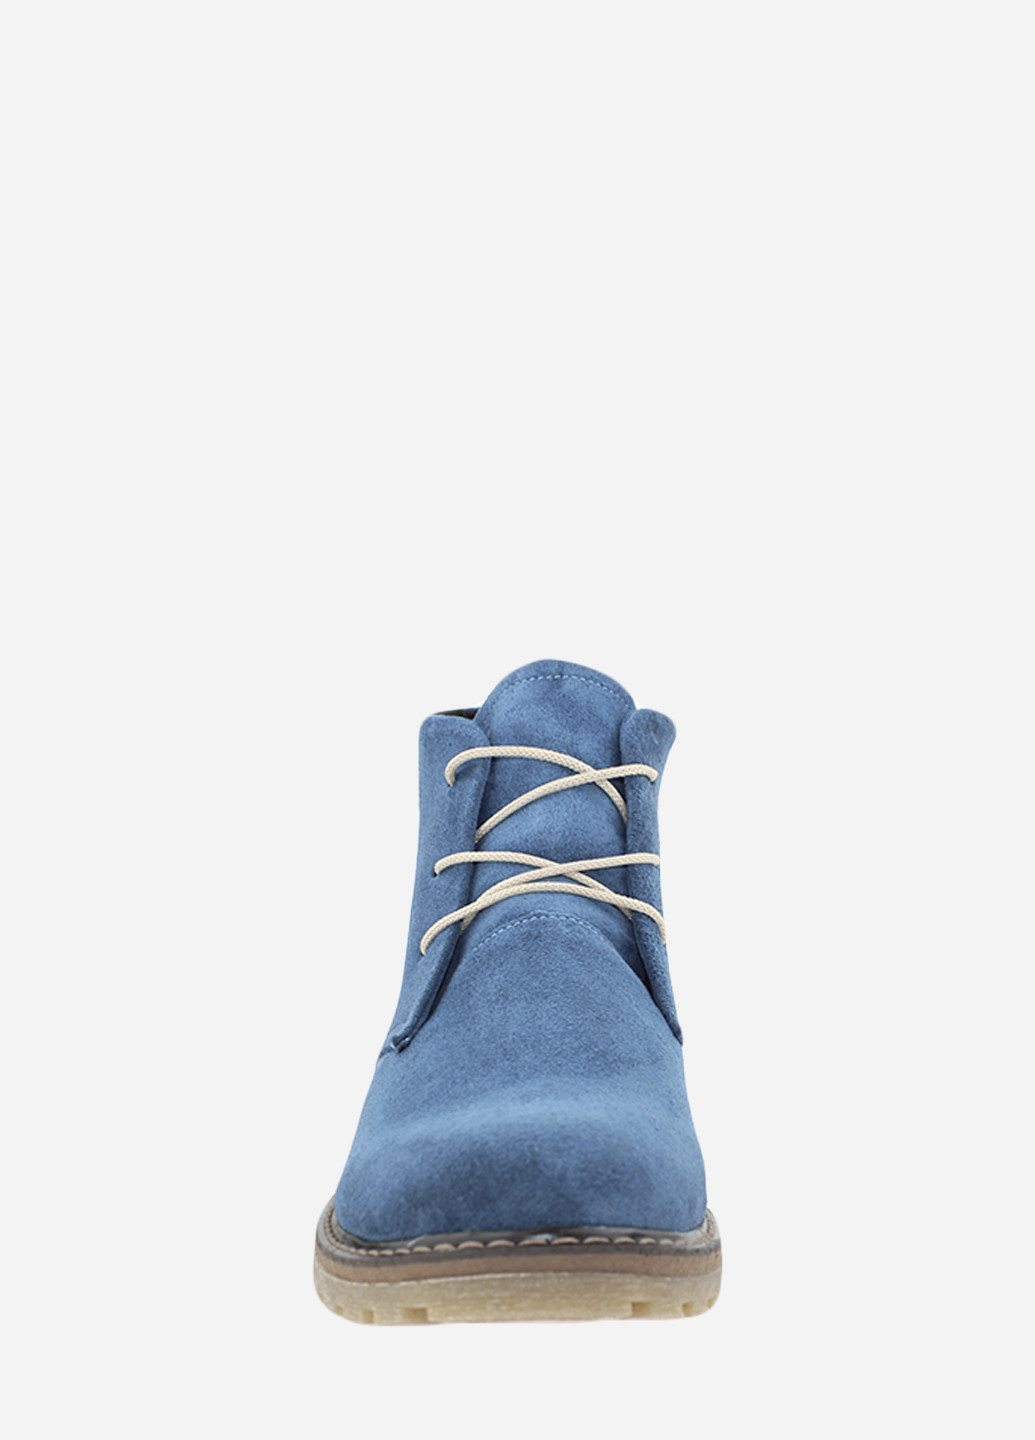 Осенние ботинки rhit431-17z-11 синий Hitcher из натуральной замши